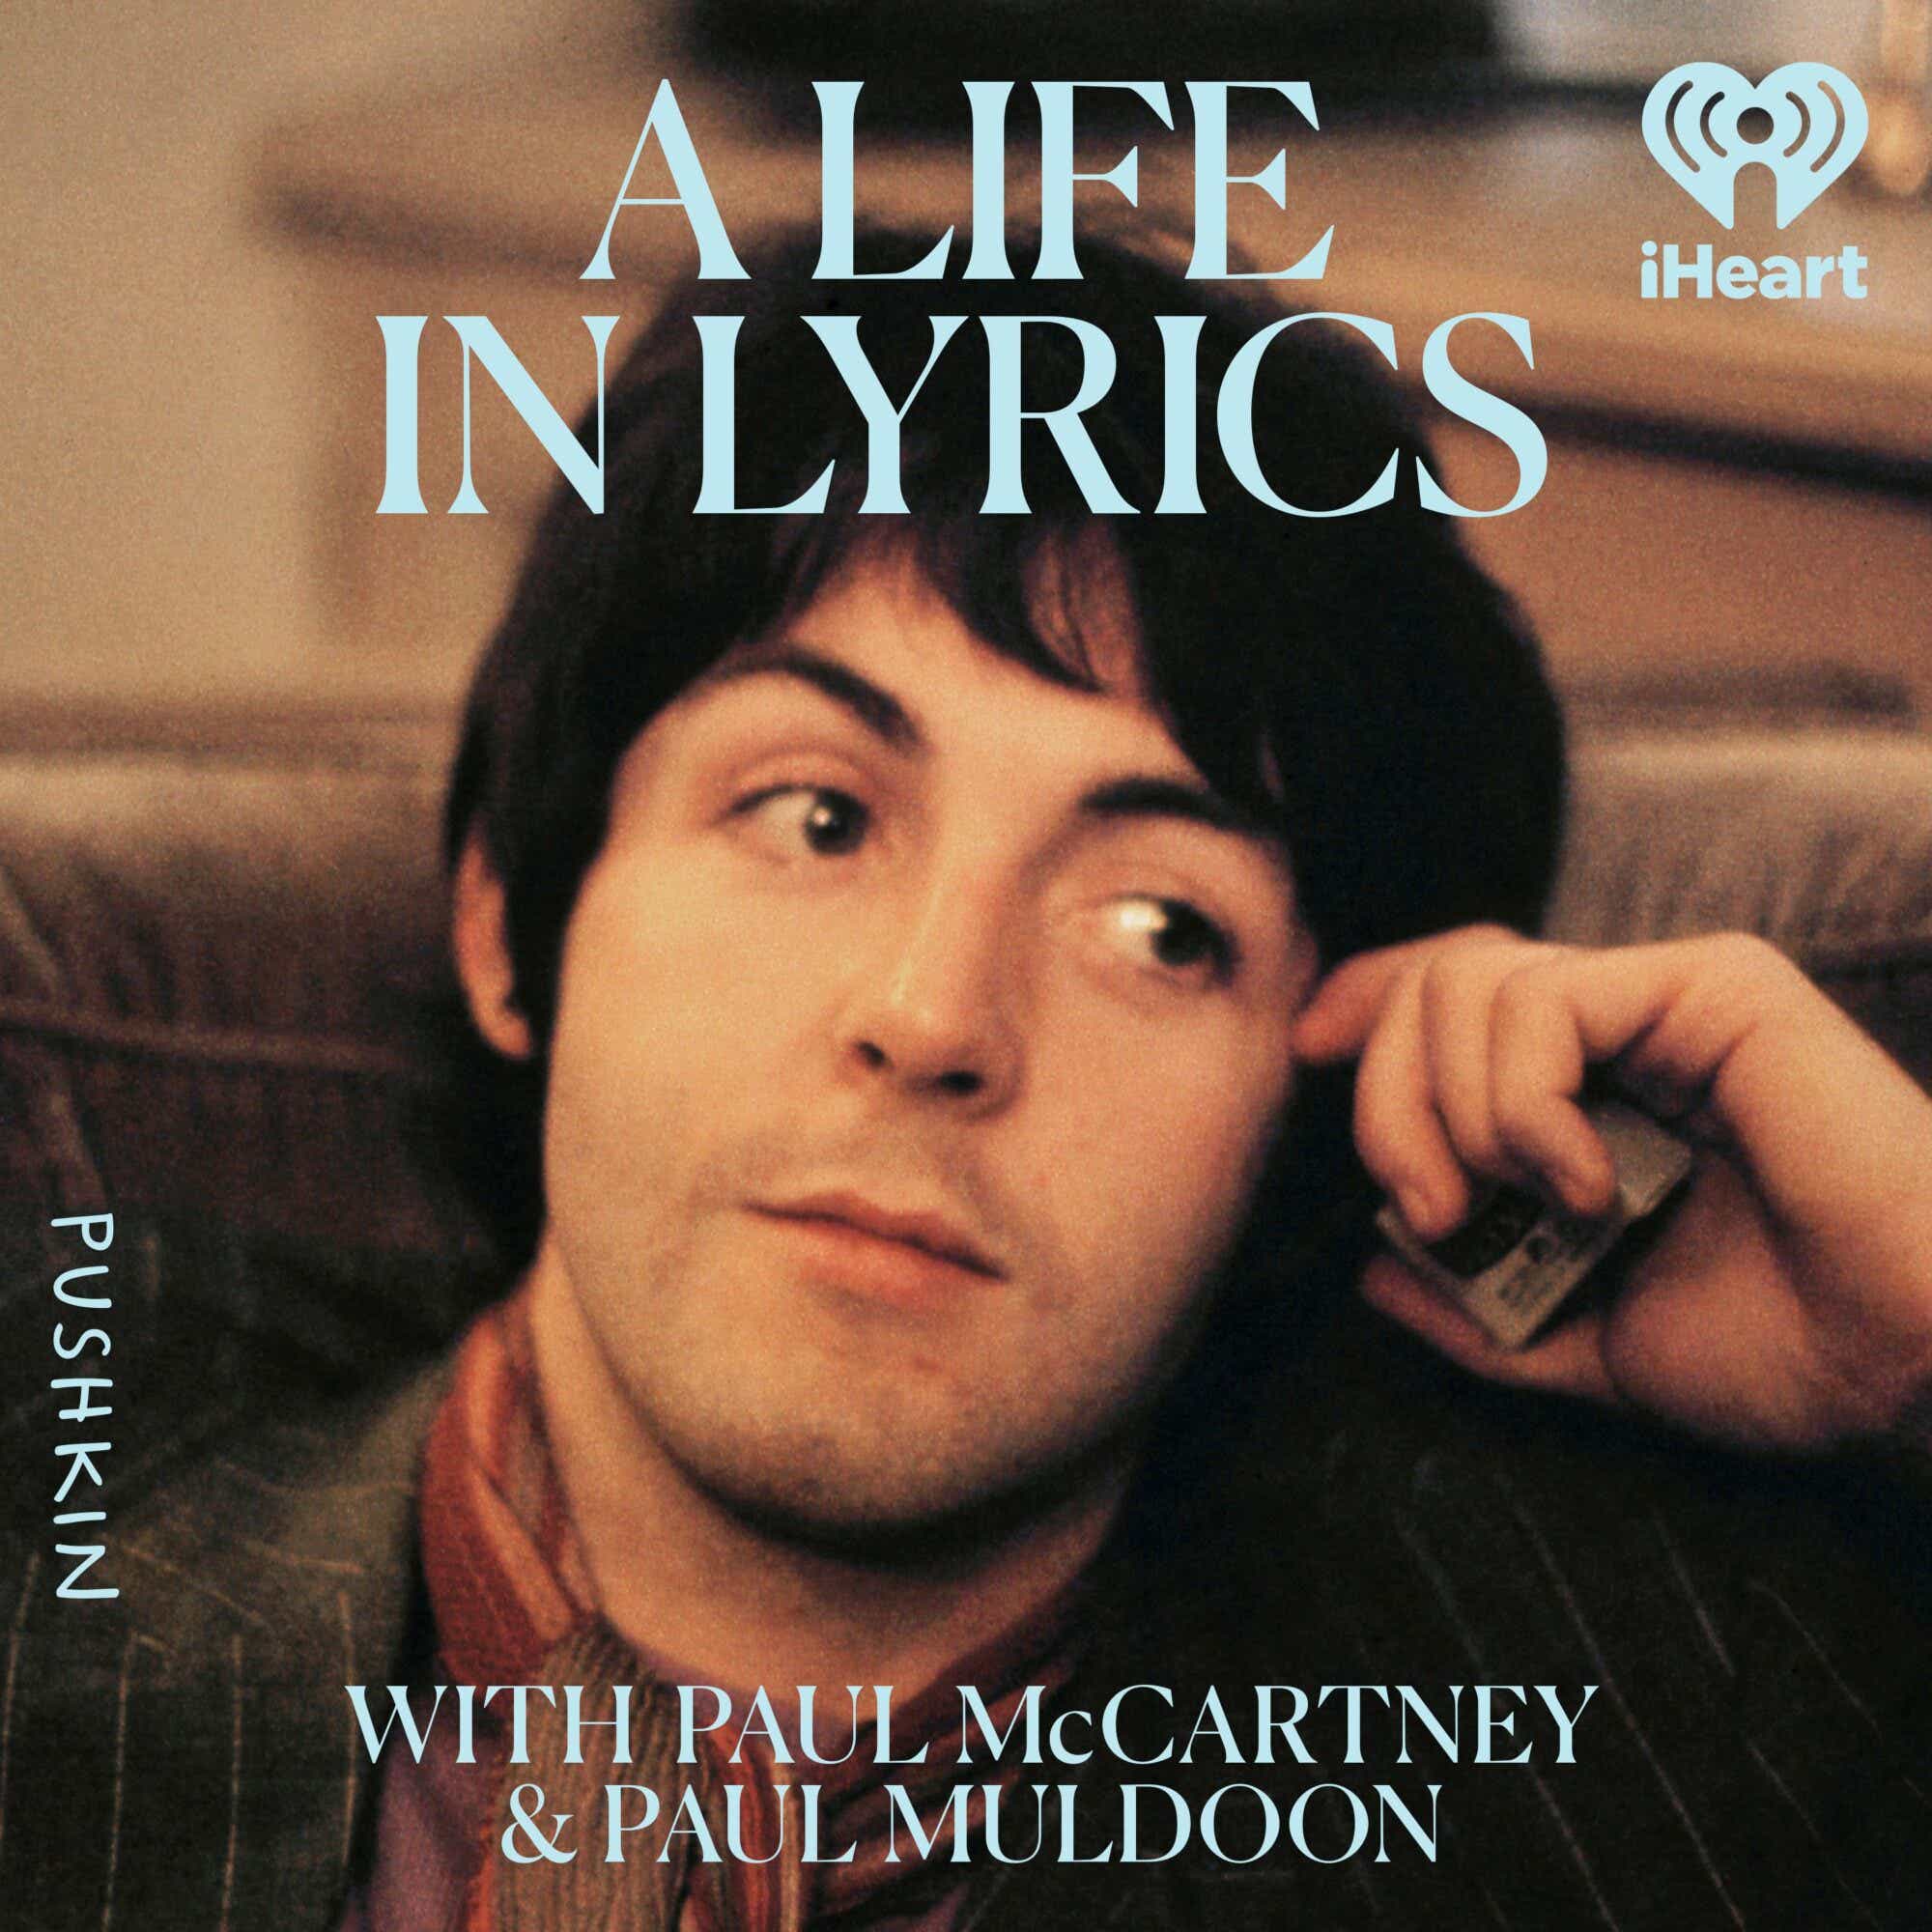 Image of Paul McCartney